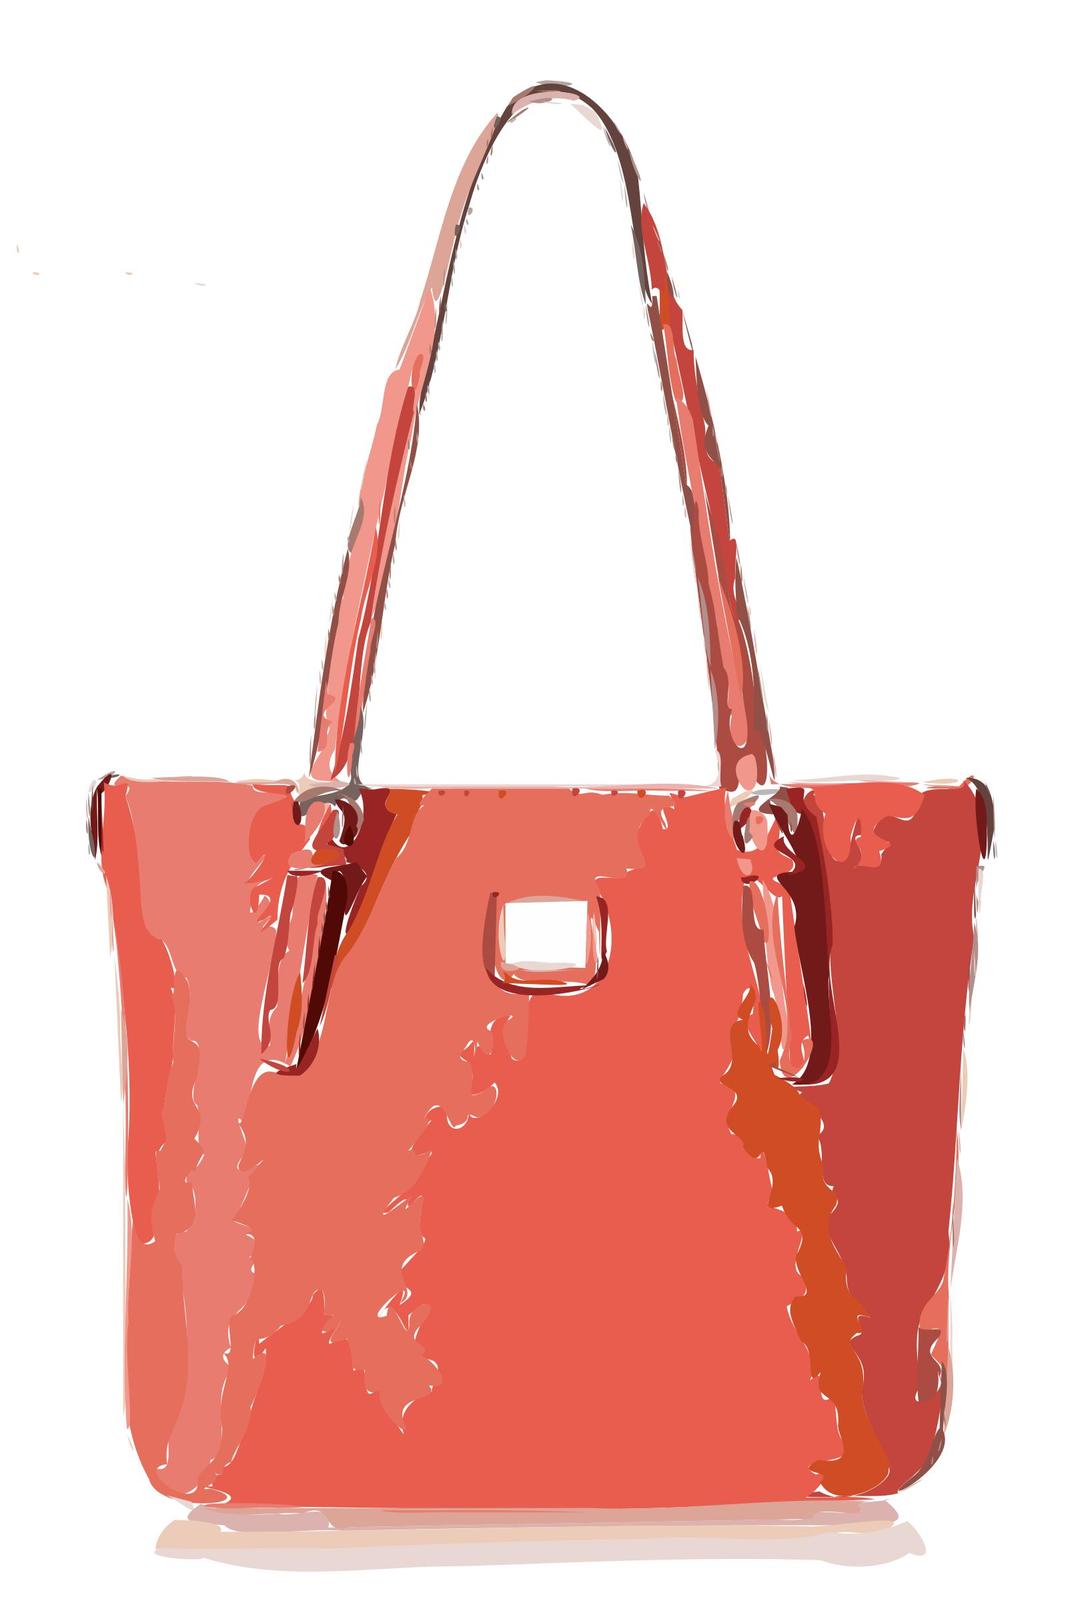 Orangish Red Handbag png transparent